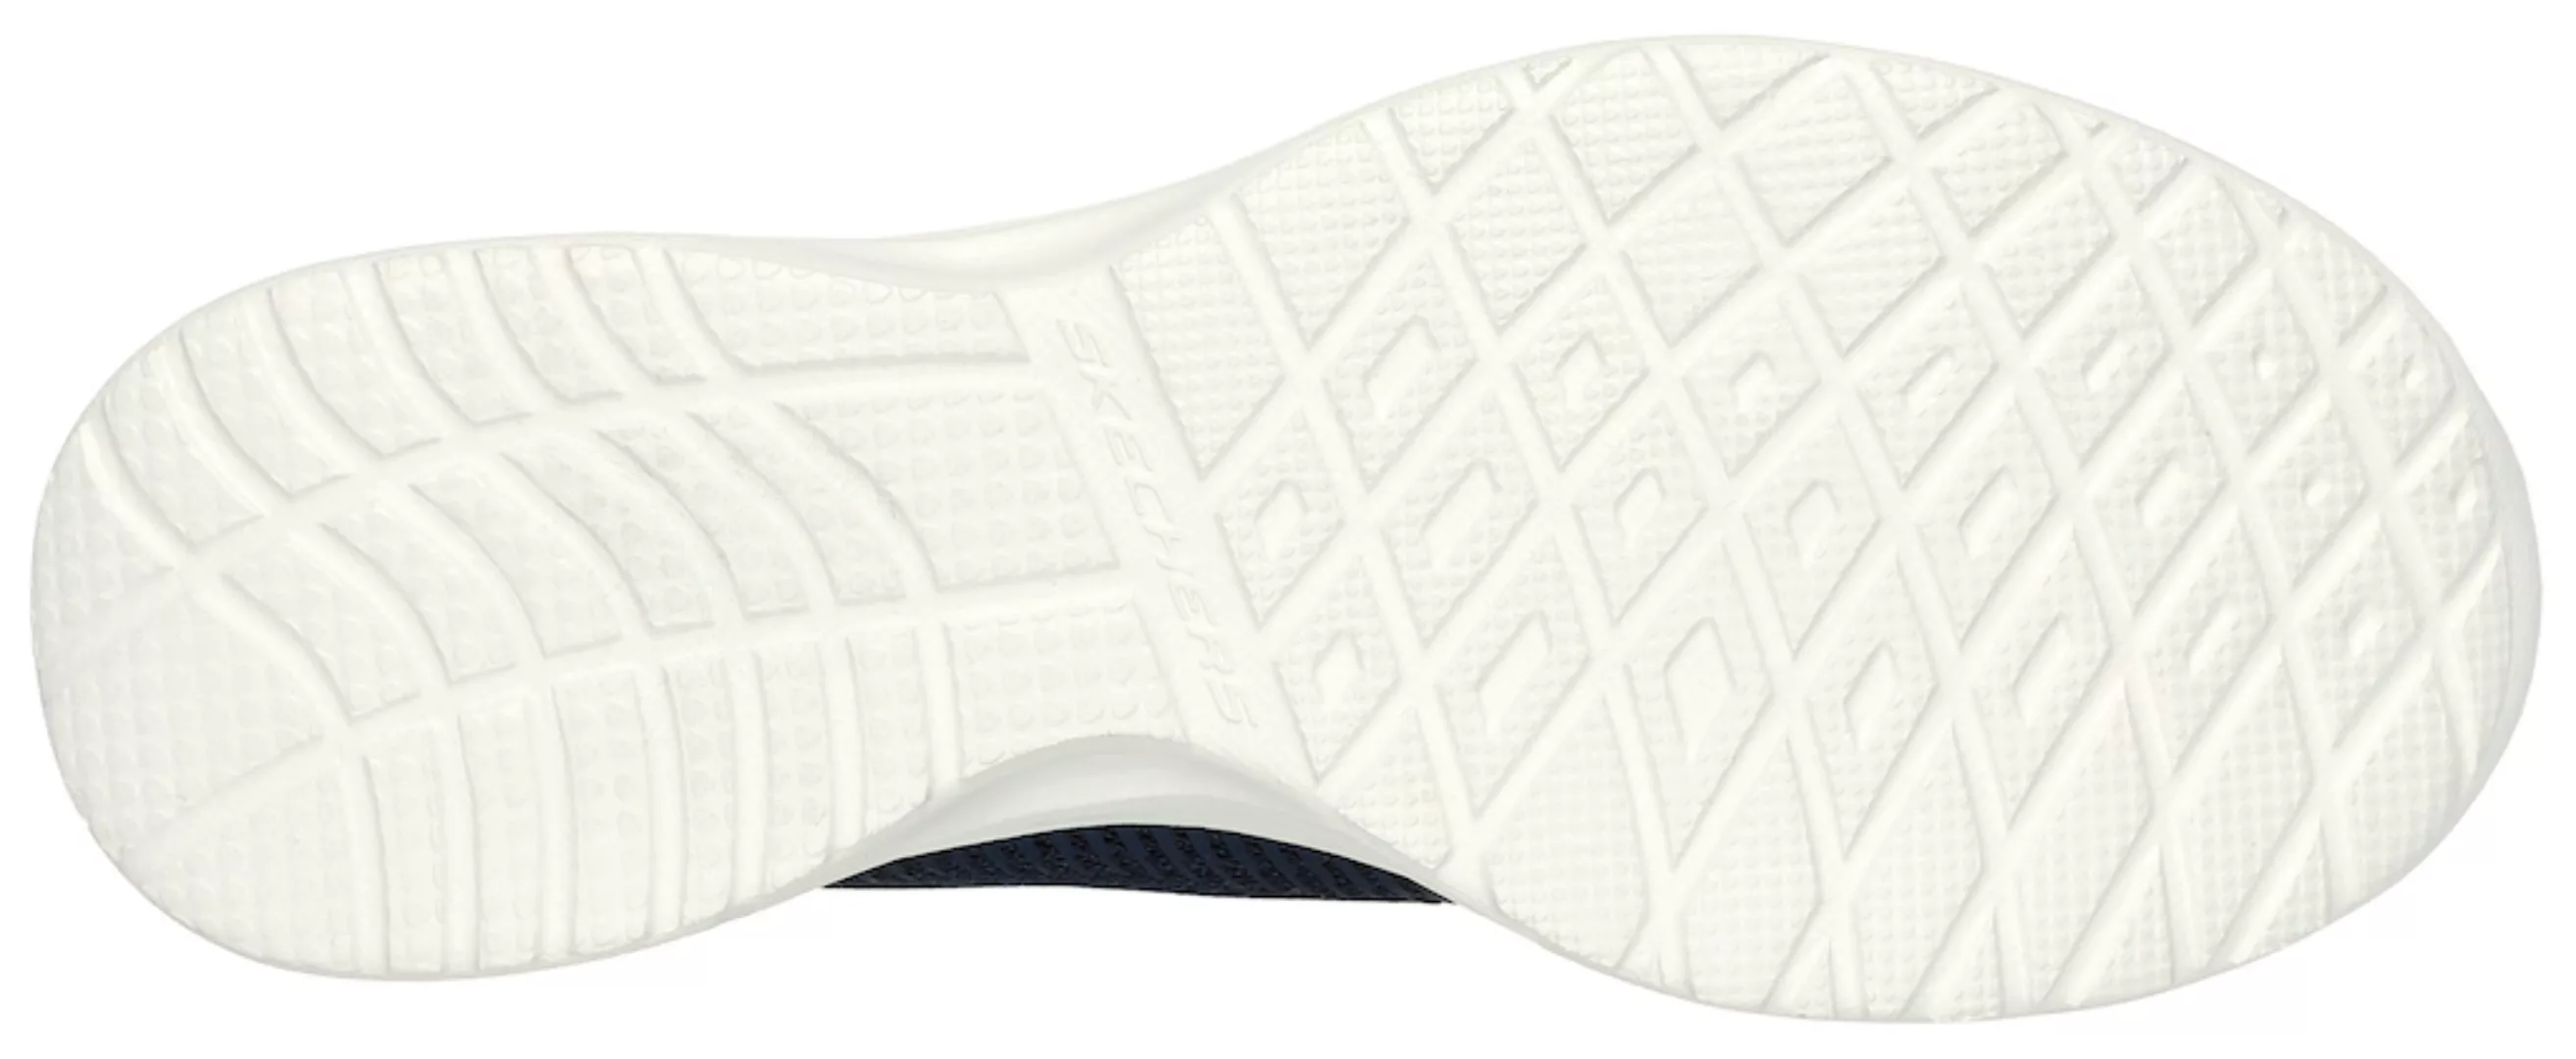 Skechers Sneaker "SKECH-AIR DYNAMIGHT-SPLENDID PATH" günstig online kaufen